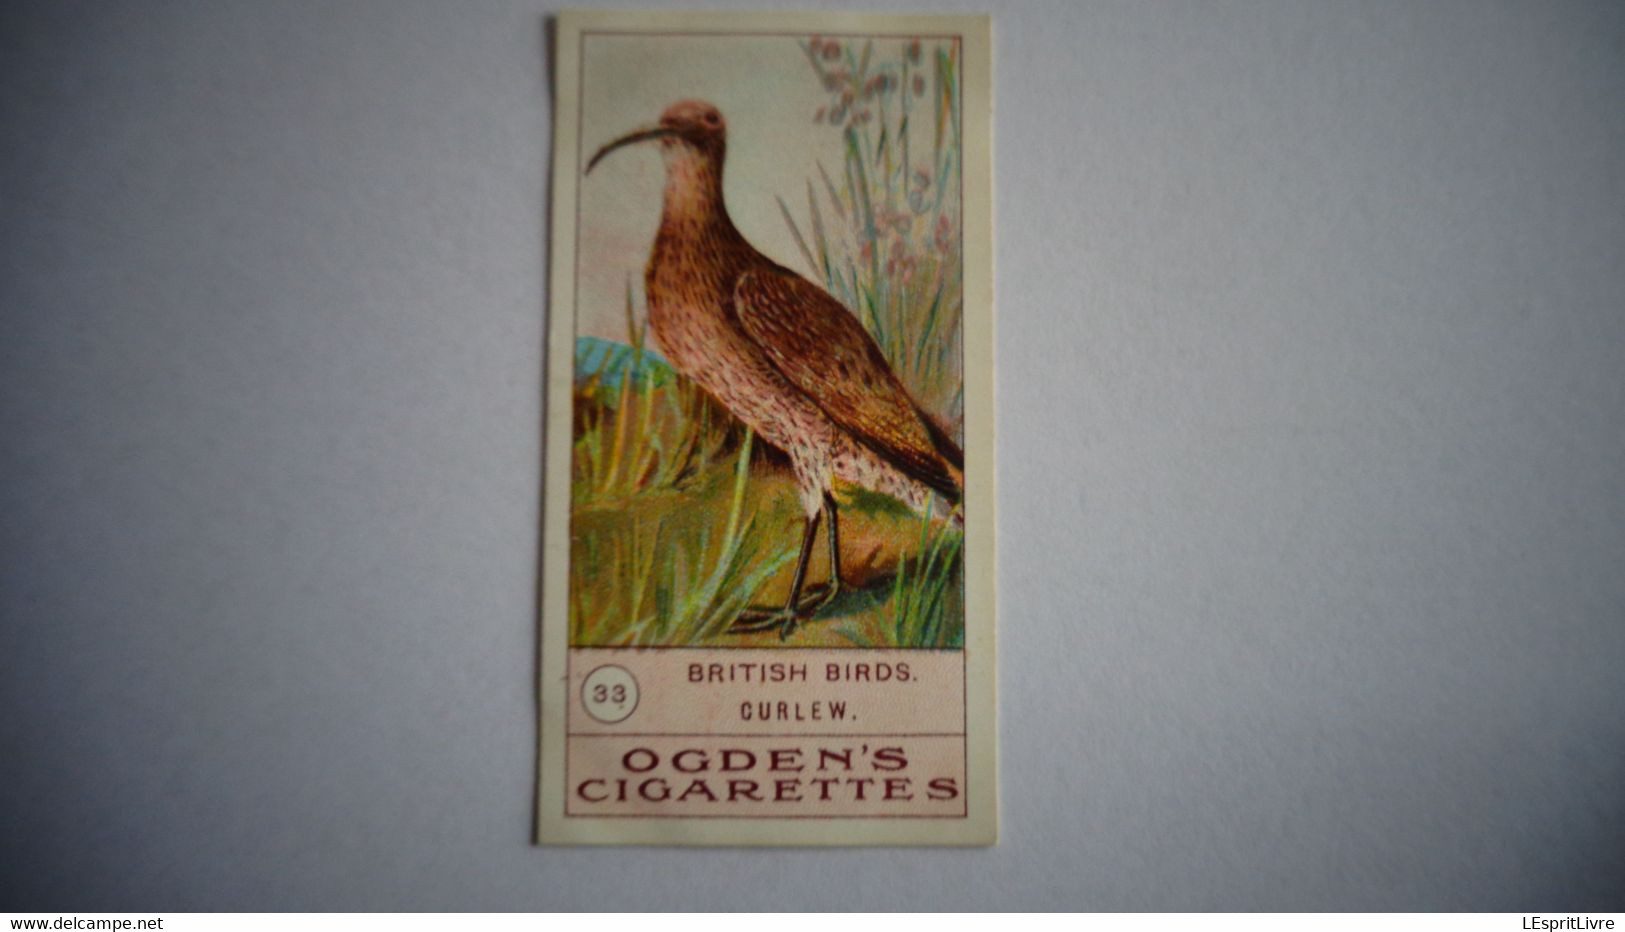 BRITISH BIRDS N° 33 CURLEW Oiseau Bird  Cigarettes OGDEN'S Tobacco Vignette Trading Card Chromo - Ogden's